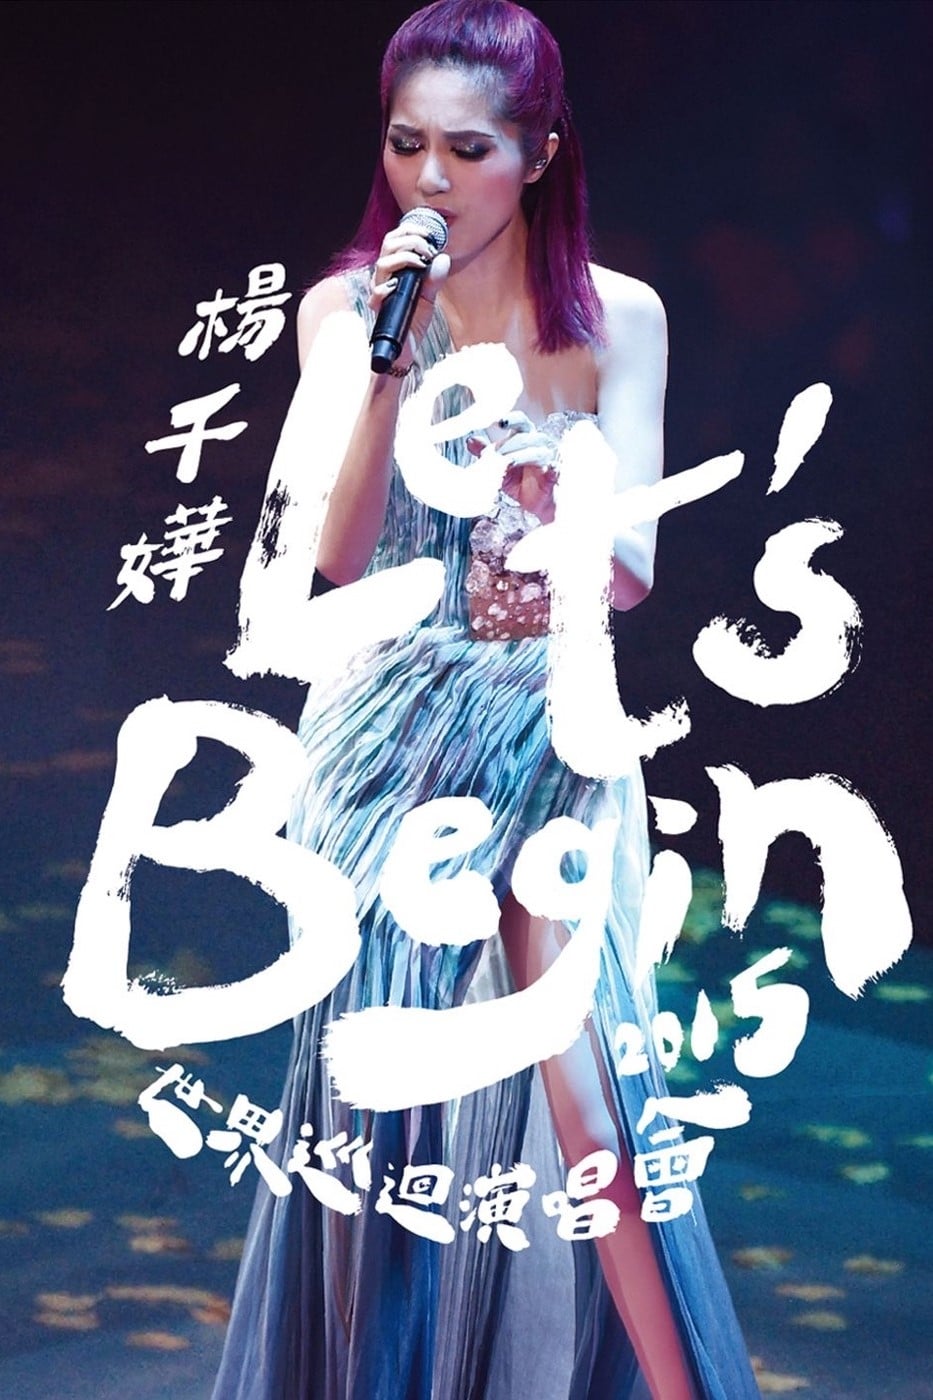 Miriam Yeung Let's Begin Concert 2015 World Tour